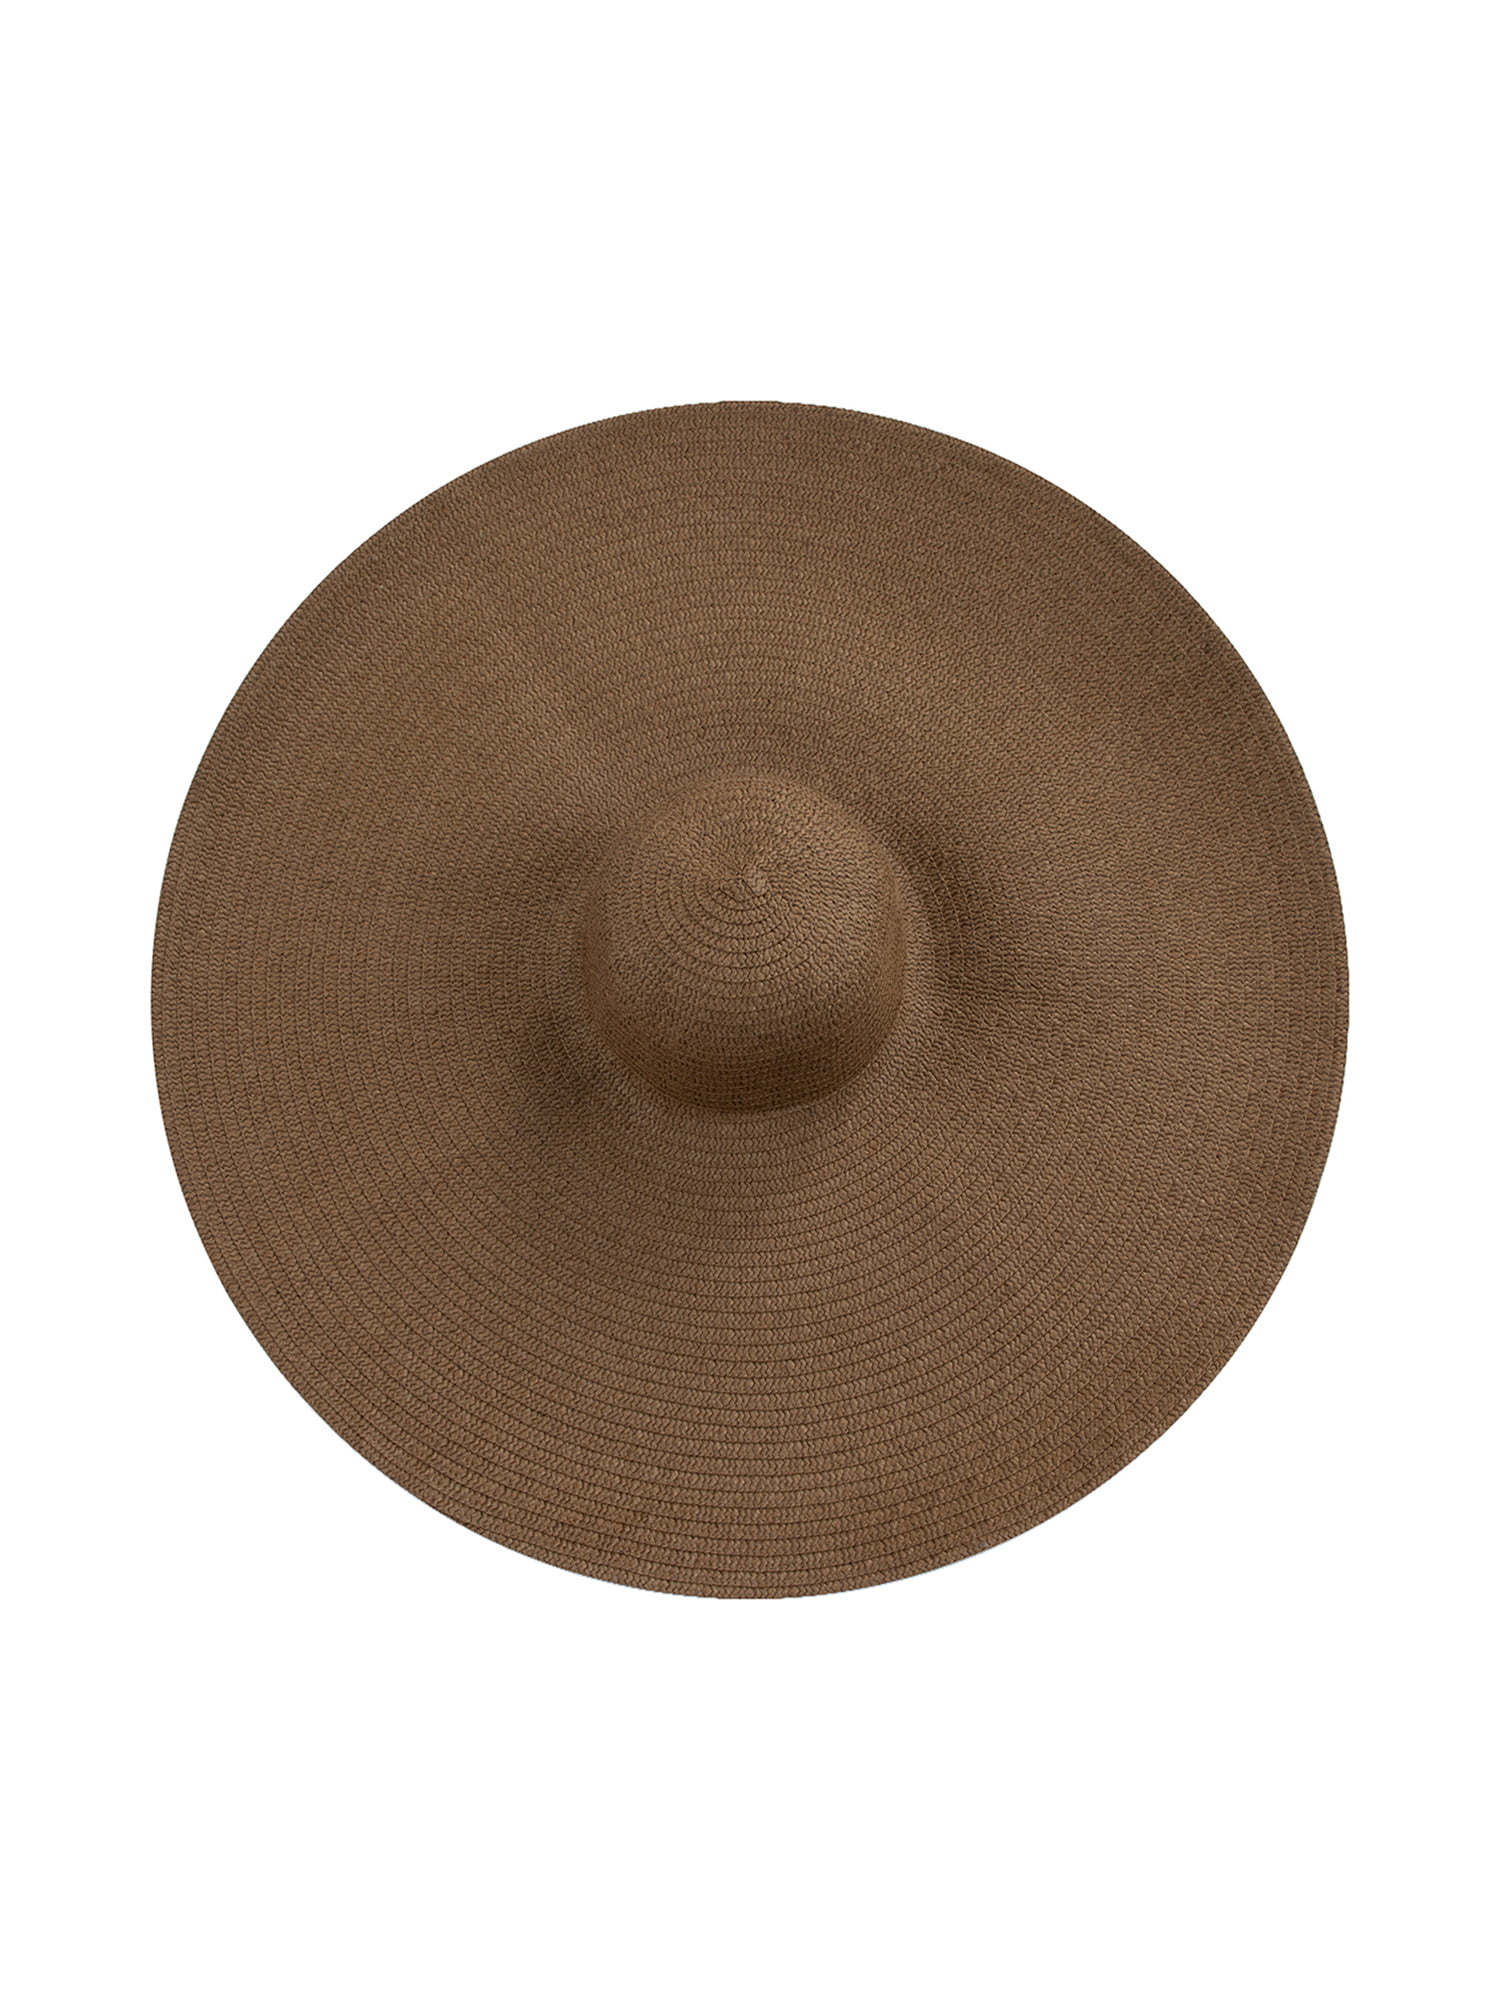 JINSIJU Trendy Fedora Hat Classic Two Tone Wide Brim Fedora Hats Felt Panama Cap with Decorative Belt for Women Men